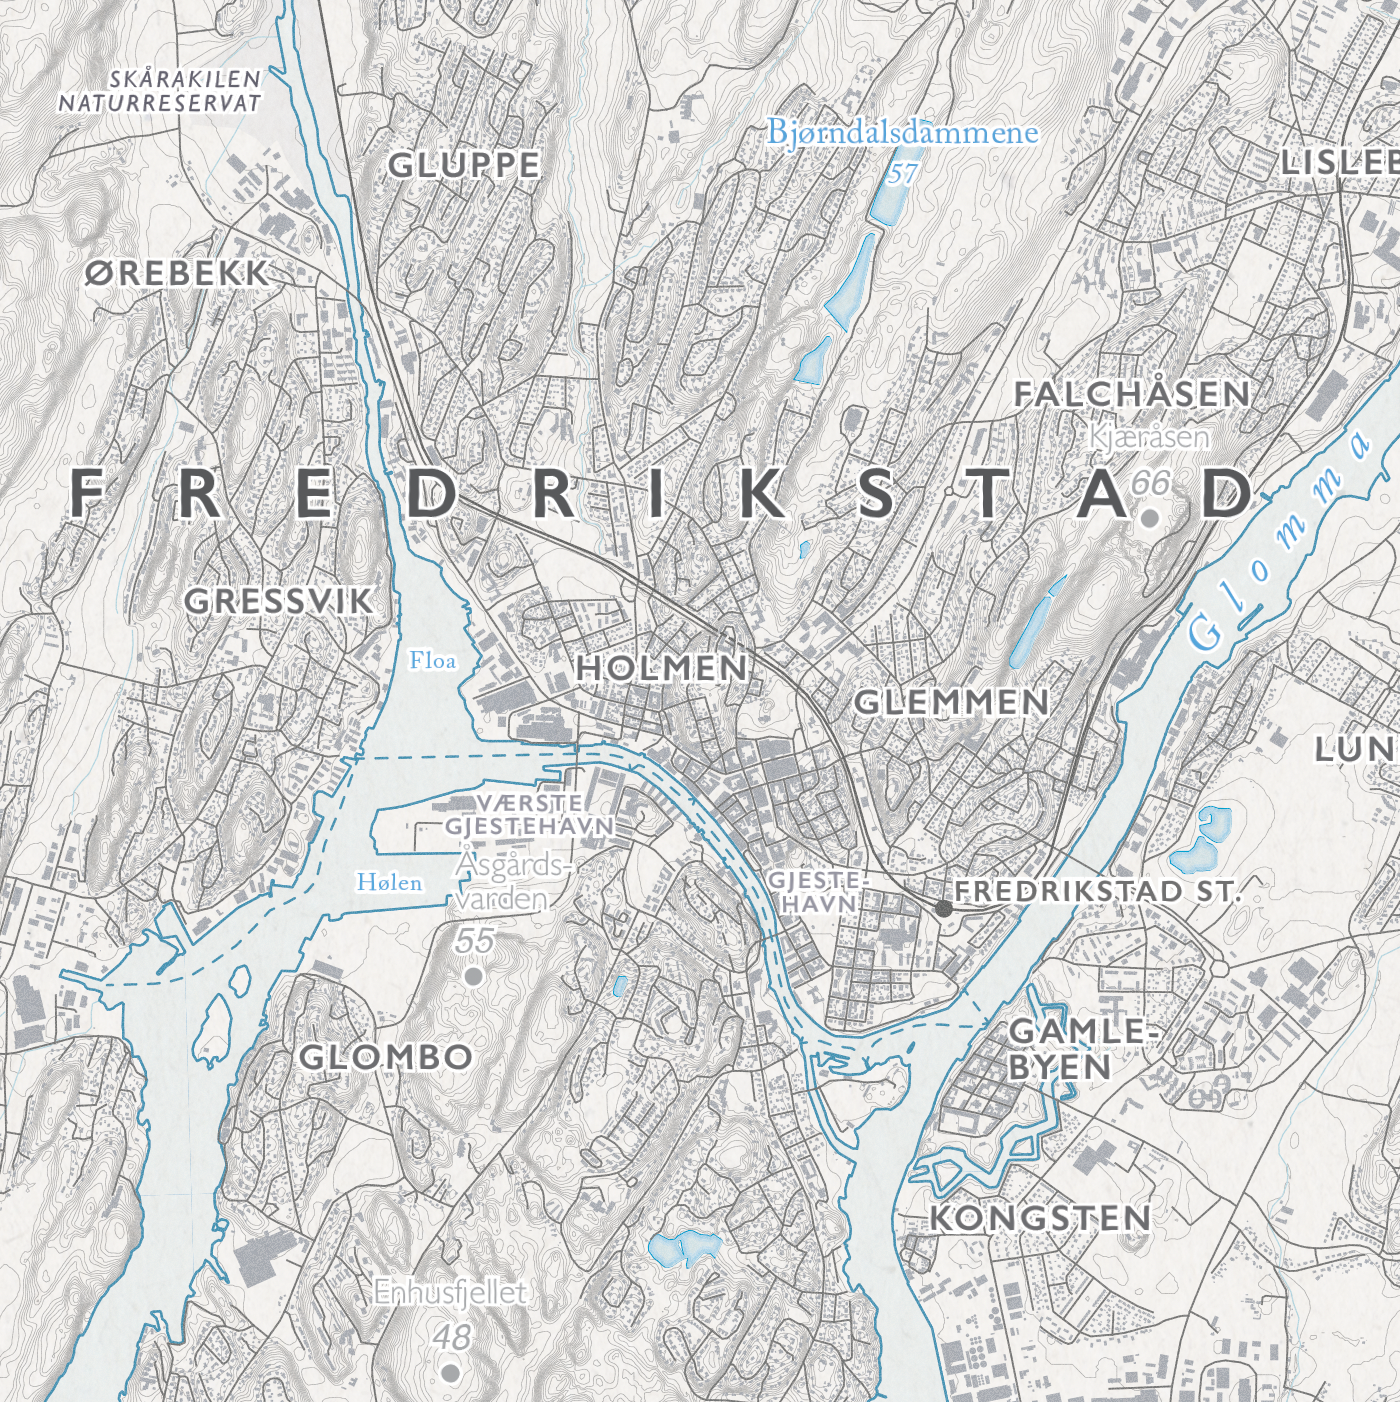 Skjærgårdskart Fredrikstad